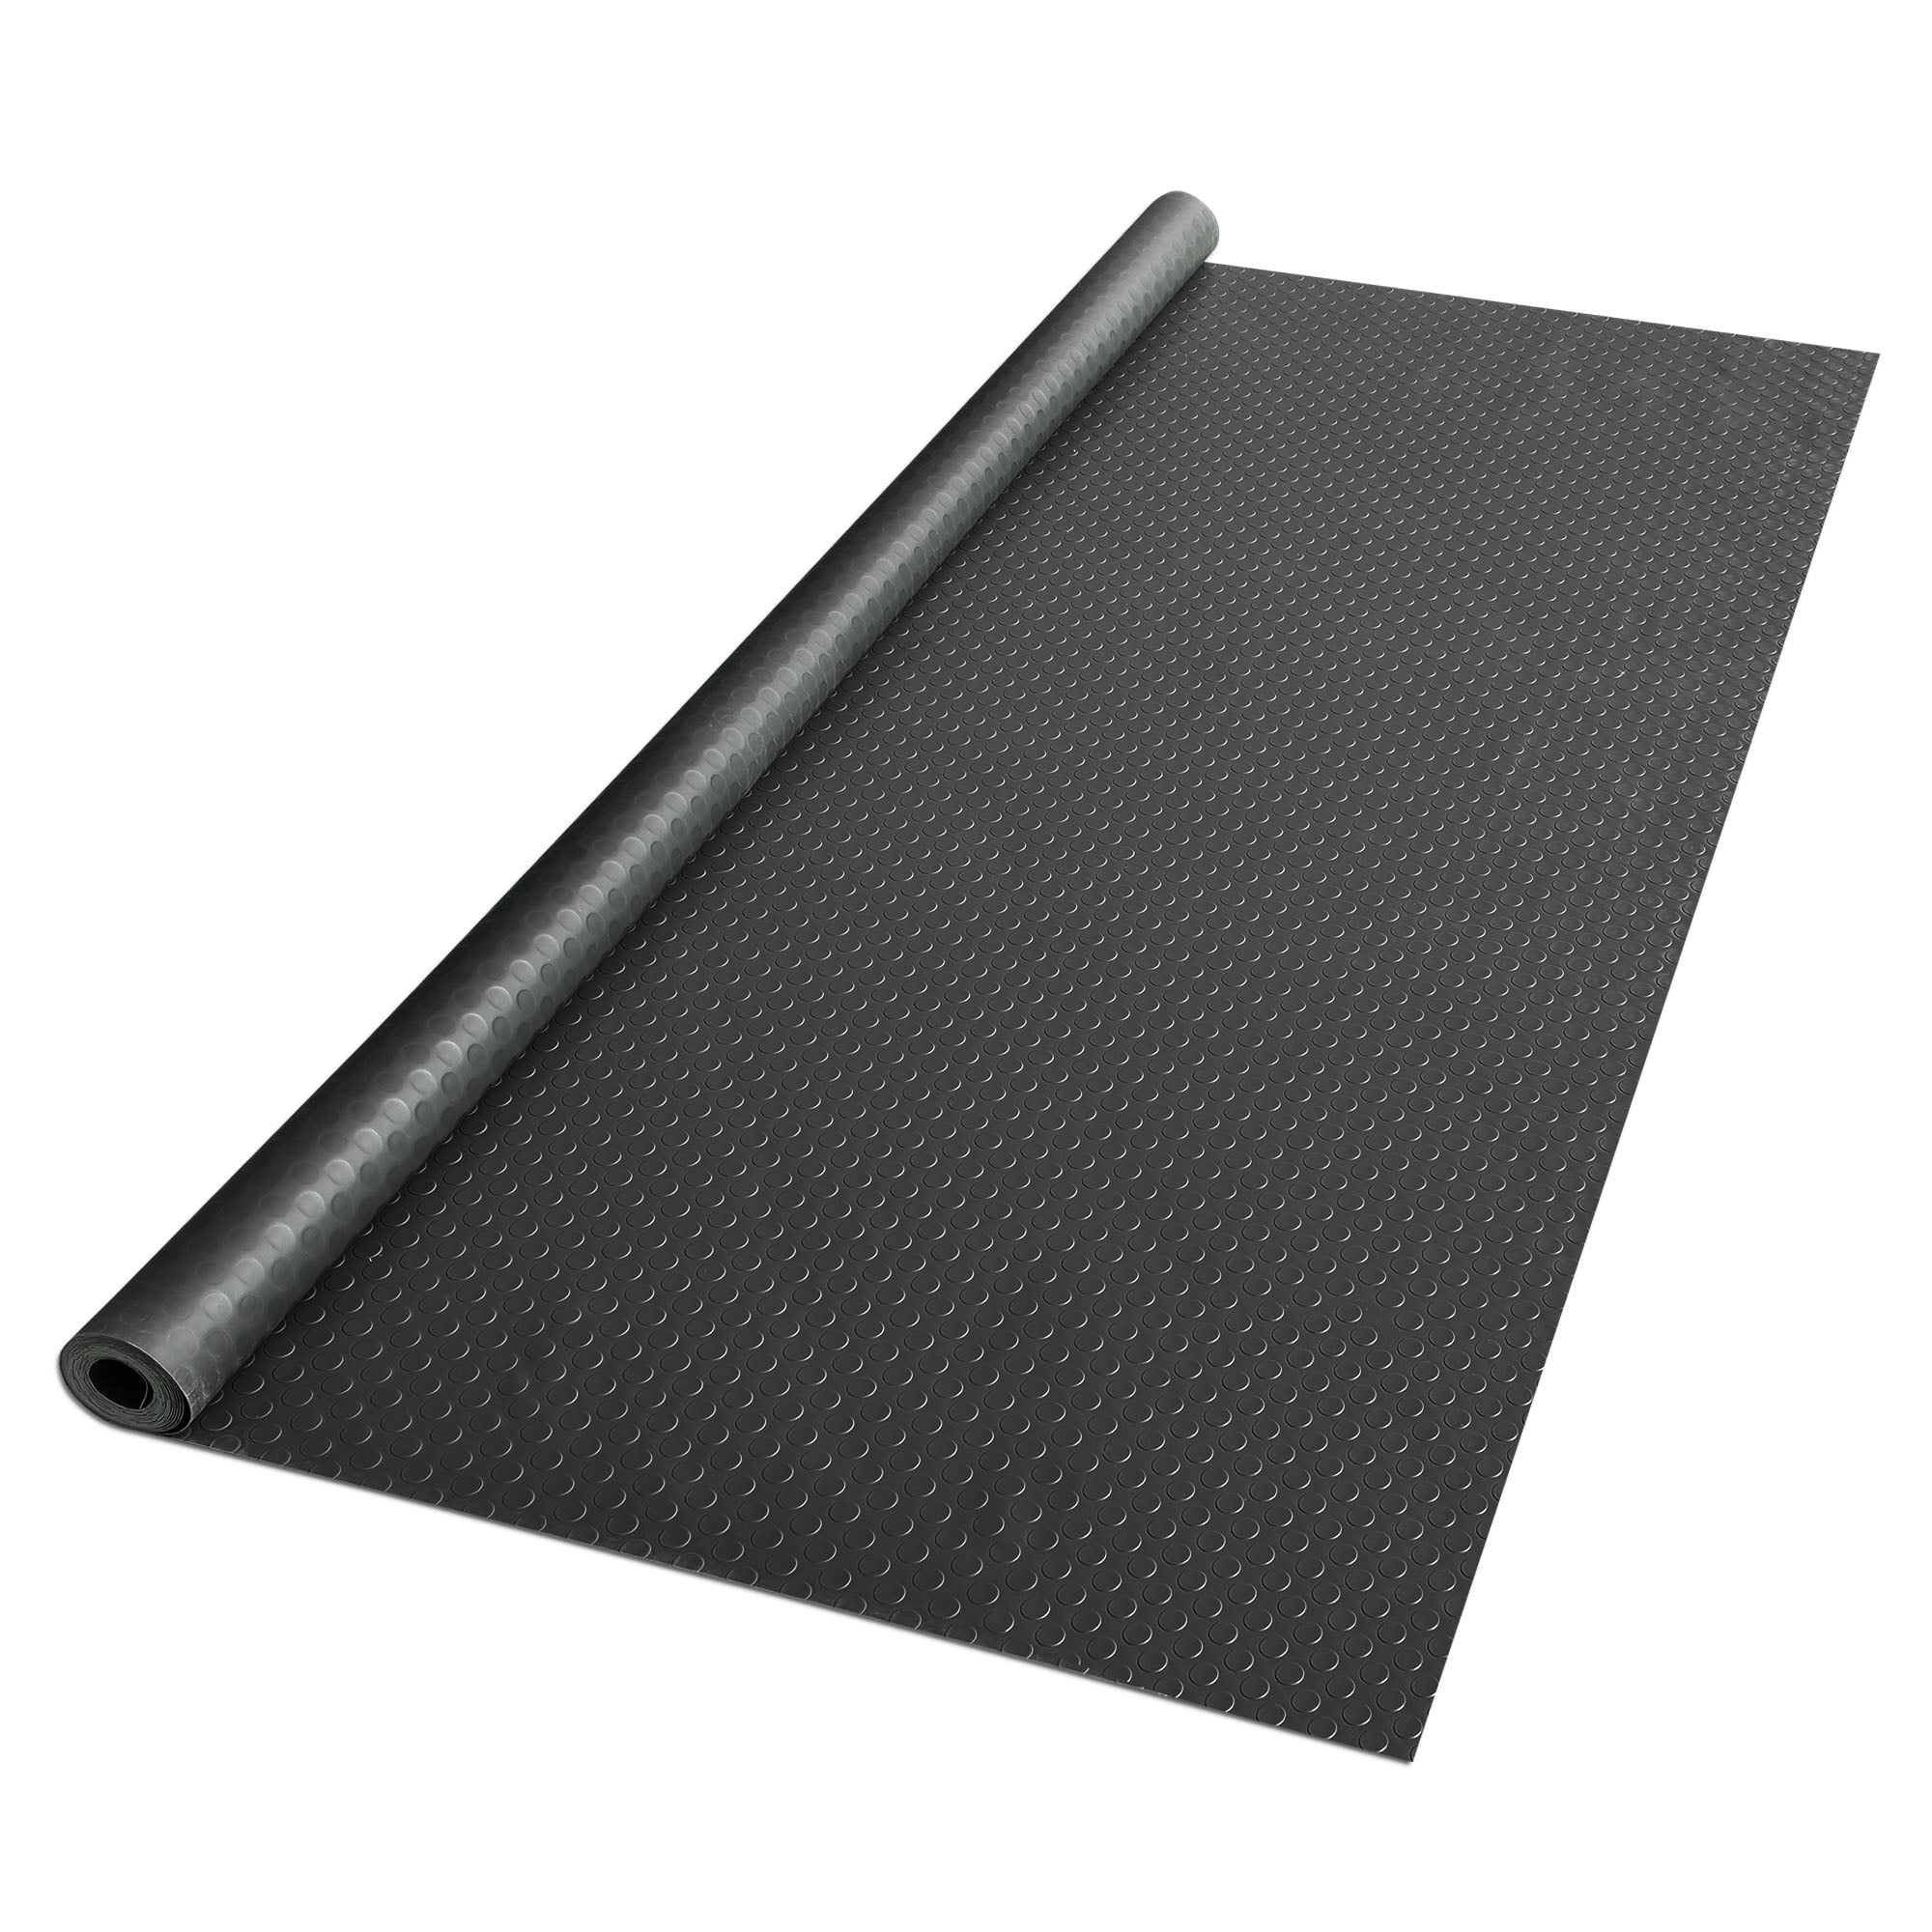 Yescom Garage Floor Mat Roll 19.5x6.5 Ft Non slip Parking Protect Cover  Workshop Under Car DIY PVC Flooring